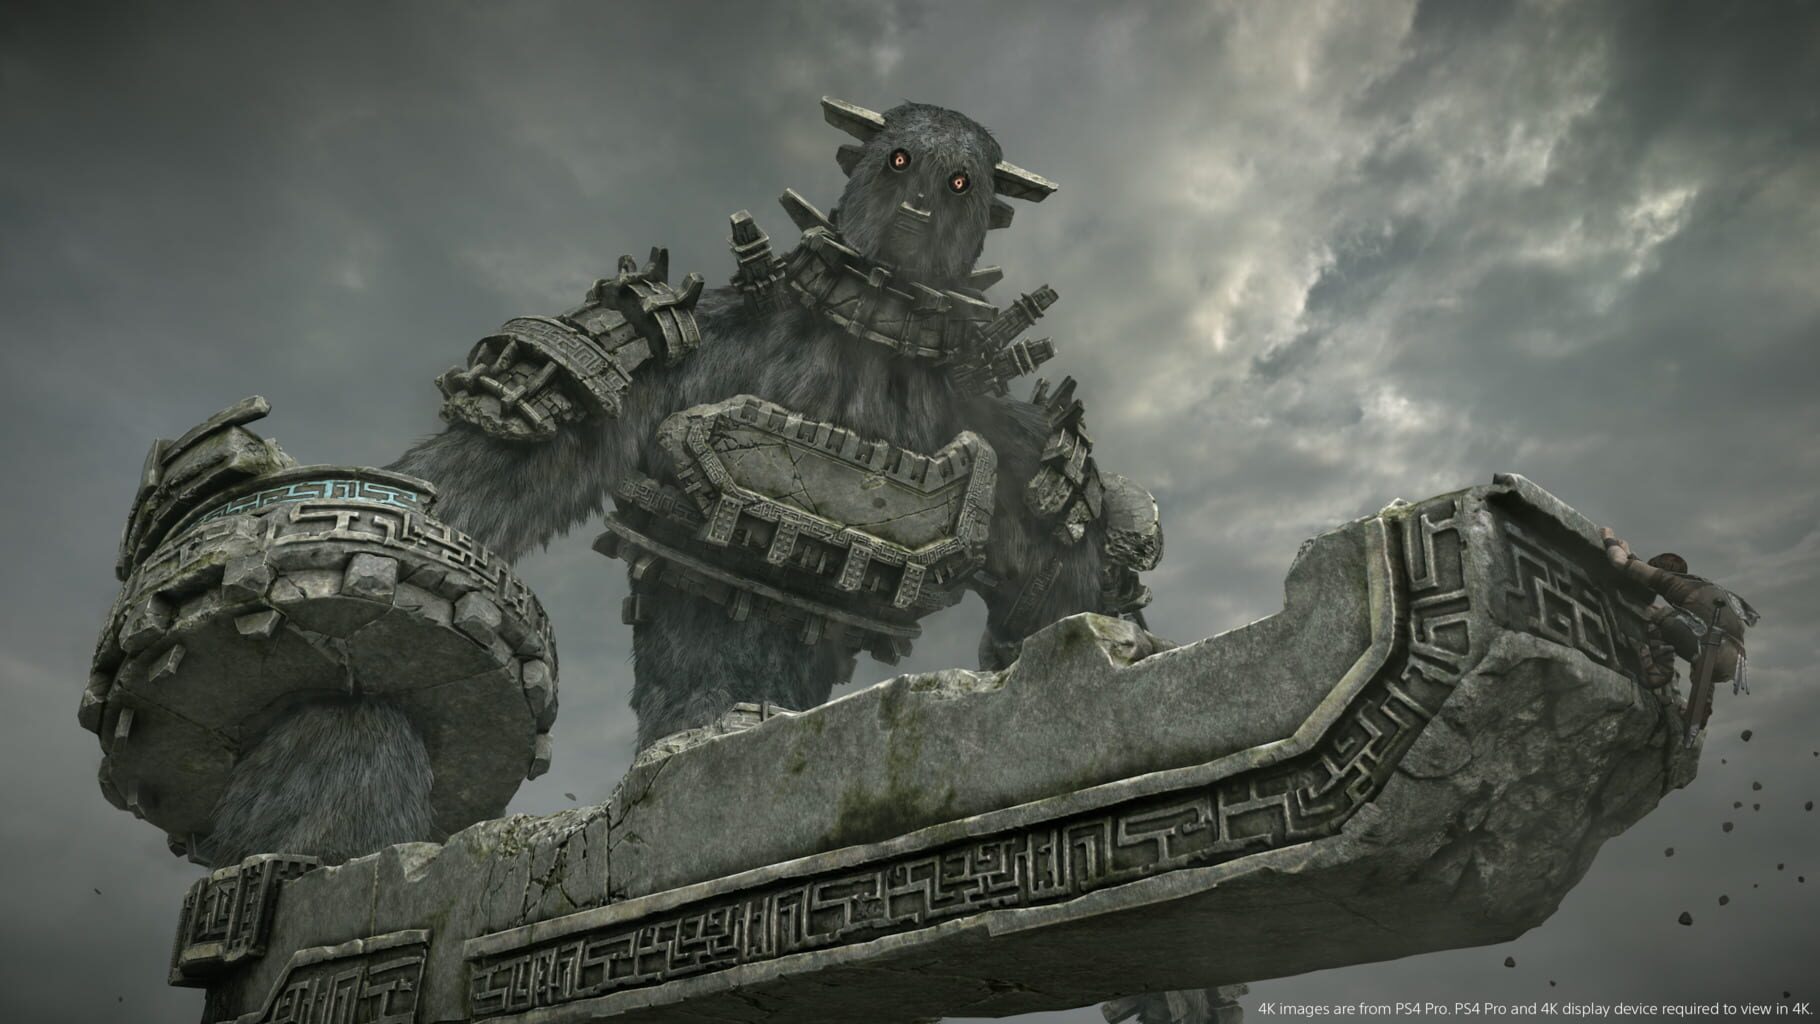 Shadow of the Colossus screenshots